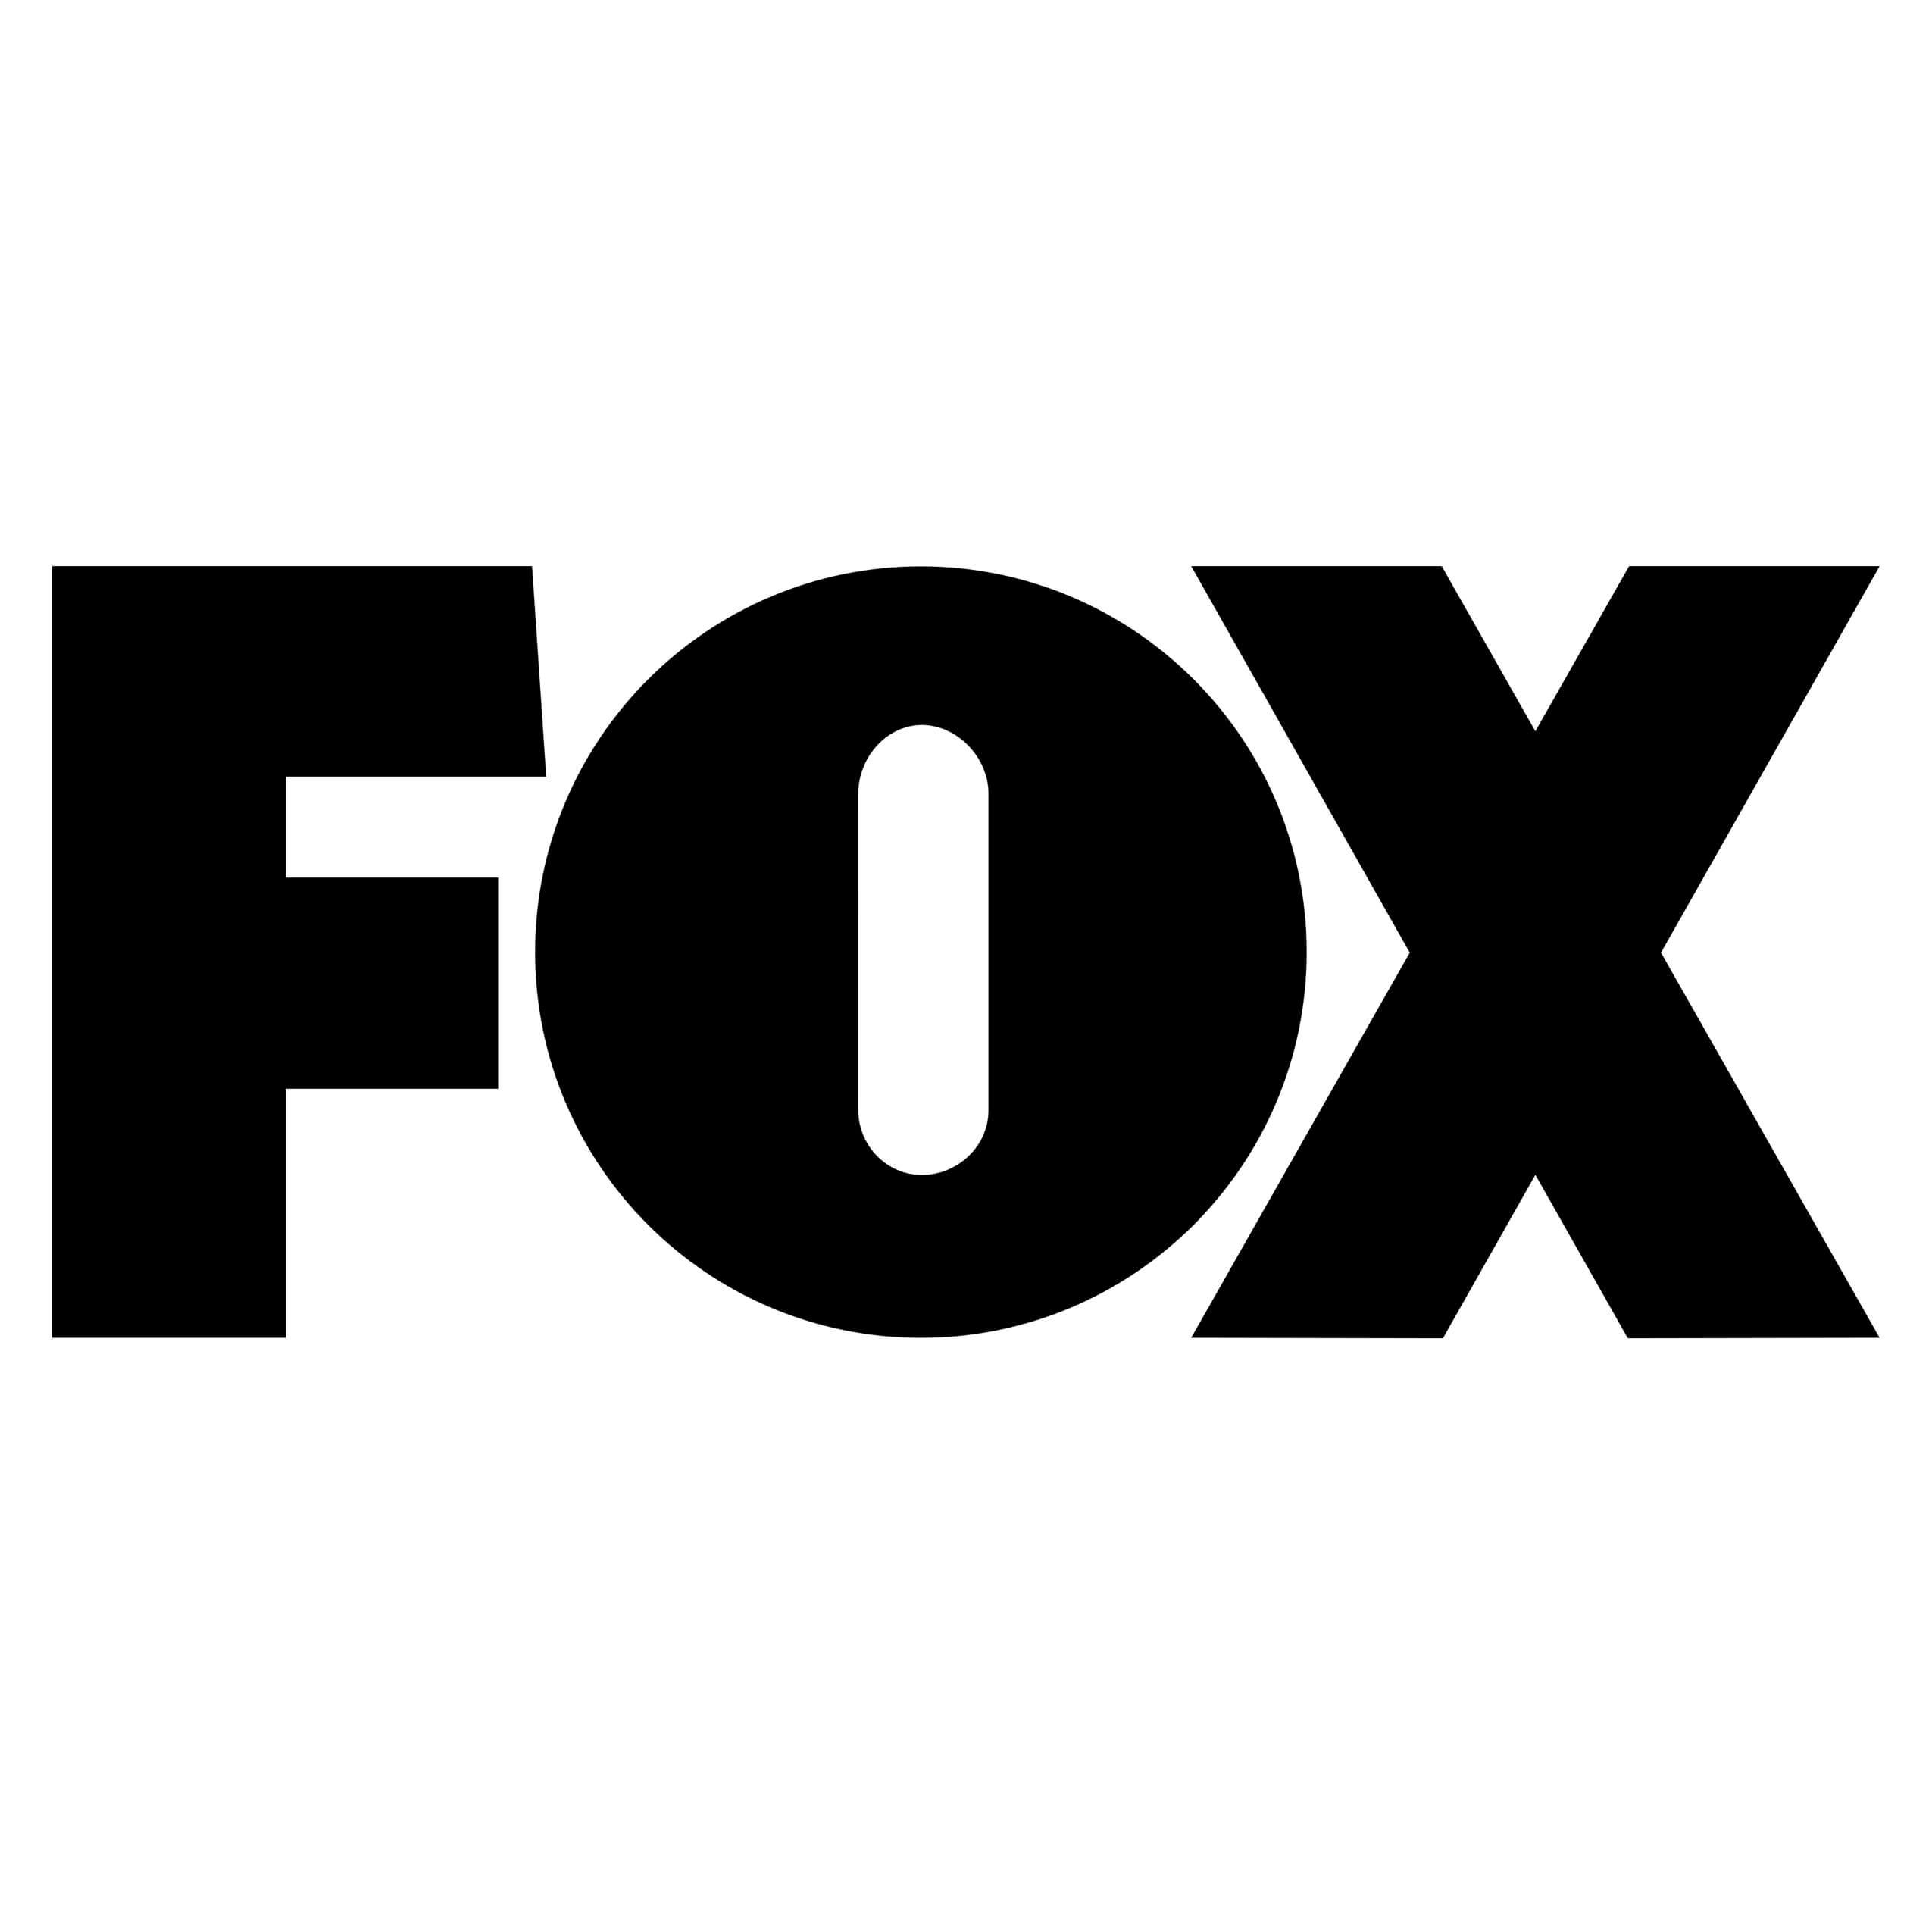 Broadcasting company. Кане Фокс. Fox Broadcasting Company. Fox TV logo. Телеканал Fox HD логотип.